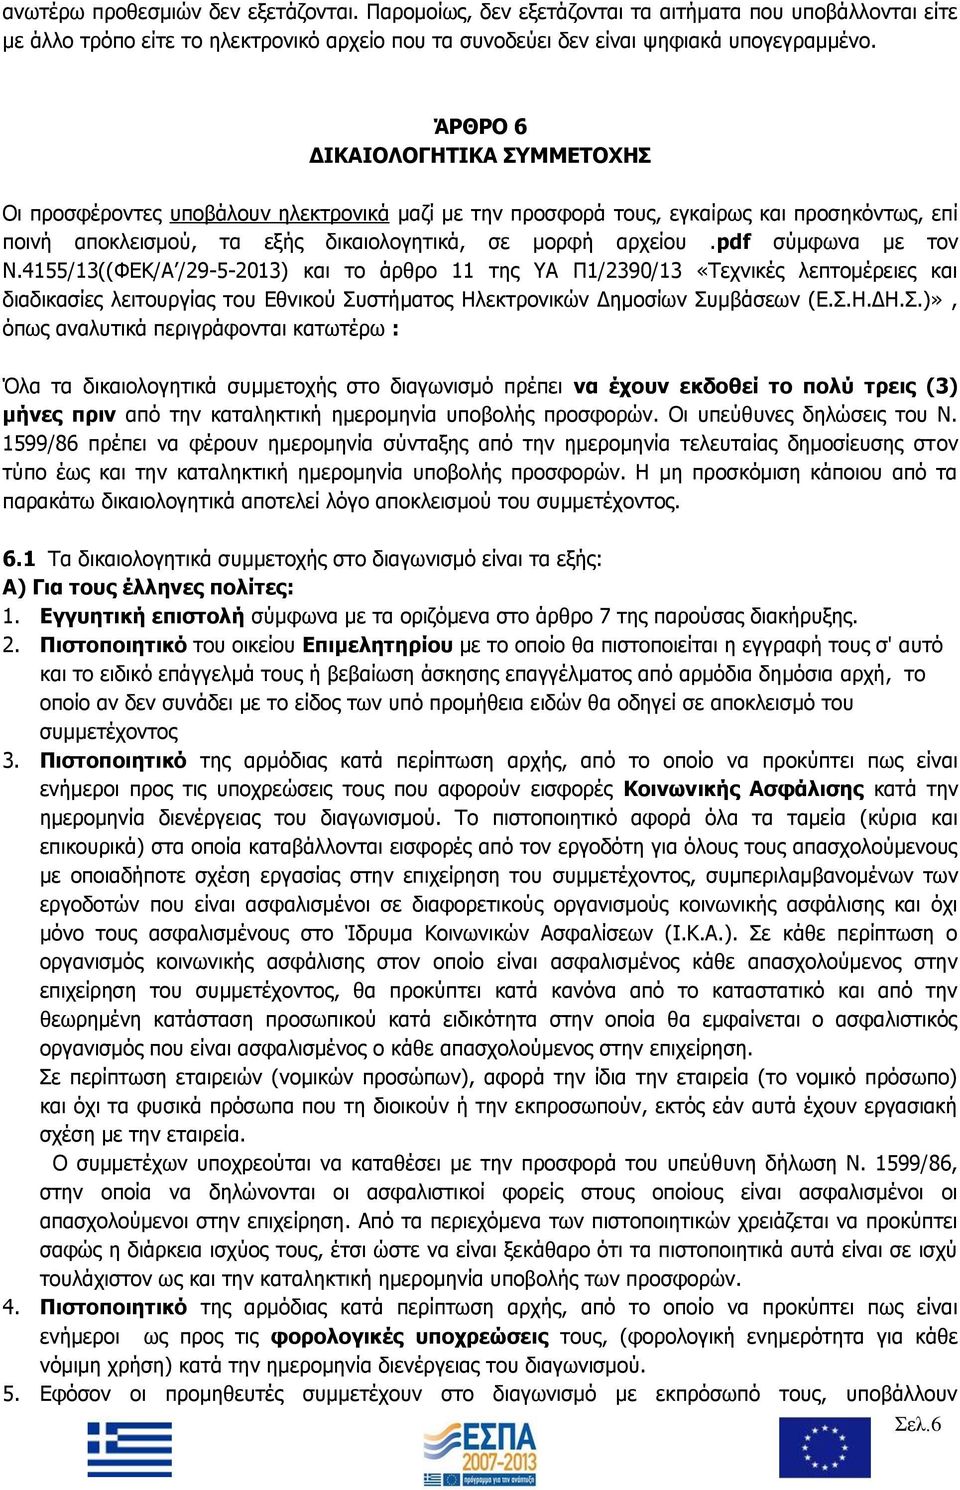 pdf σύμφωνα με τον Ν.4155/13((ΦΕΚ/Α /29-5-2013) και το άρθρο 11 της ΥΑ Π1/2390/13 «Τεχνικές λεπτομέρειες και διαδικασίες λειτουργίας του Εθνικού Συ